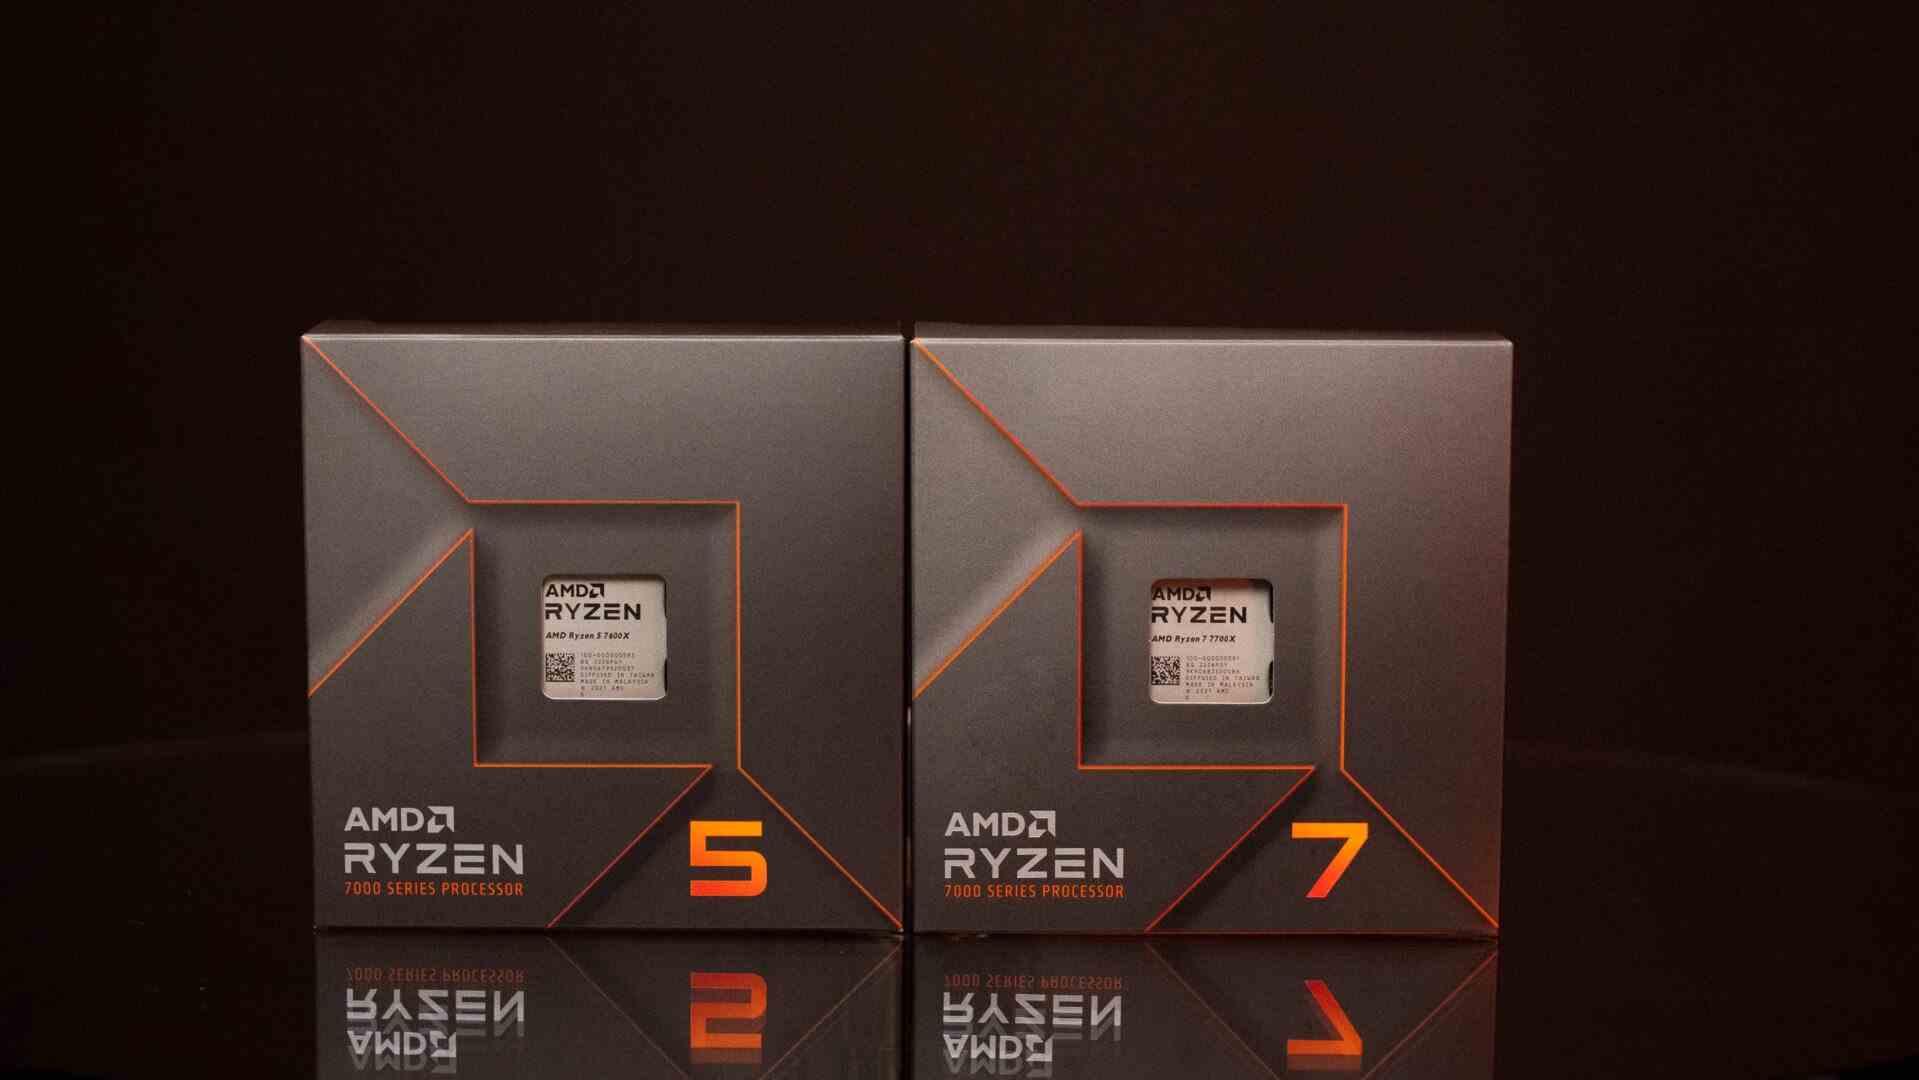 Group photo of the AMD Ryzen 7000